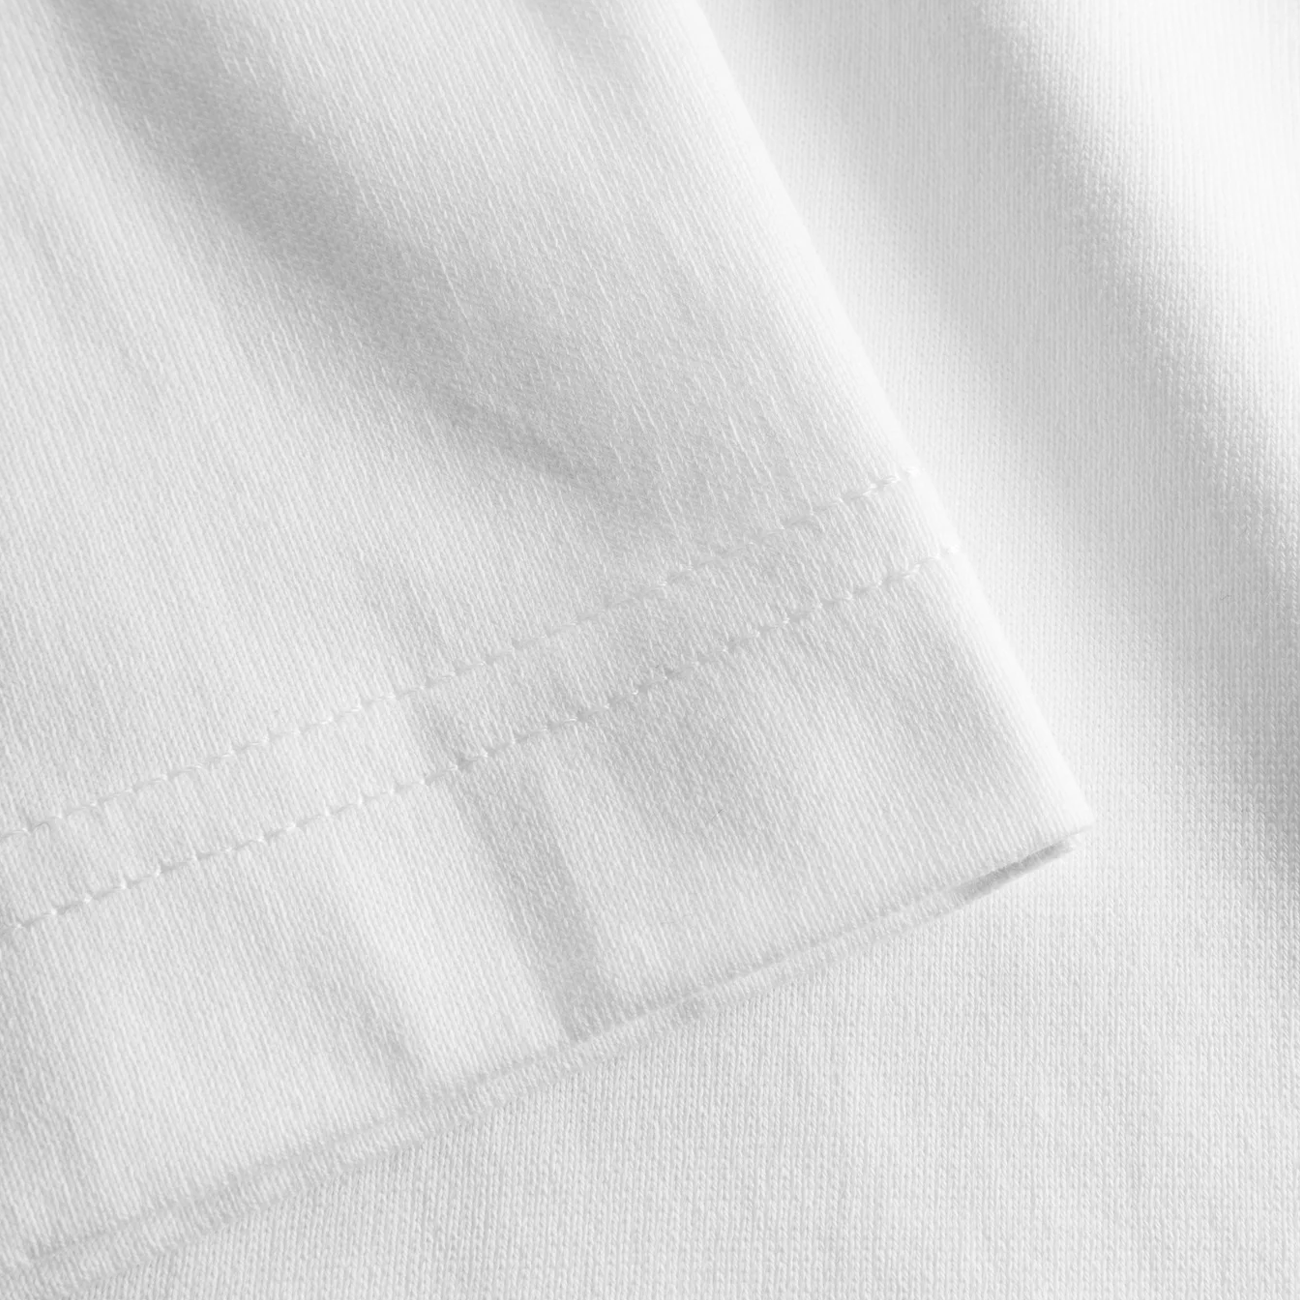 Johannes Organic 'Konanbadsvej' Print T-Shirt - White